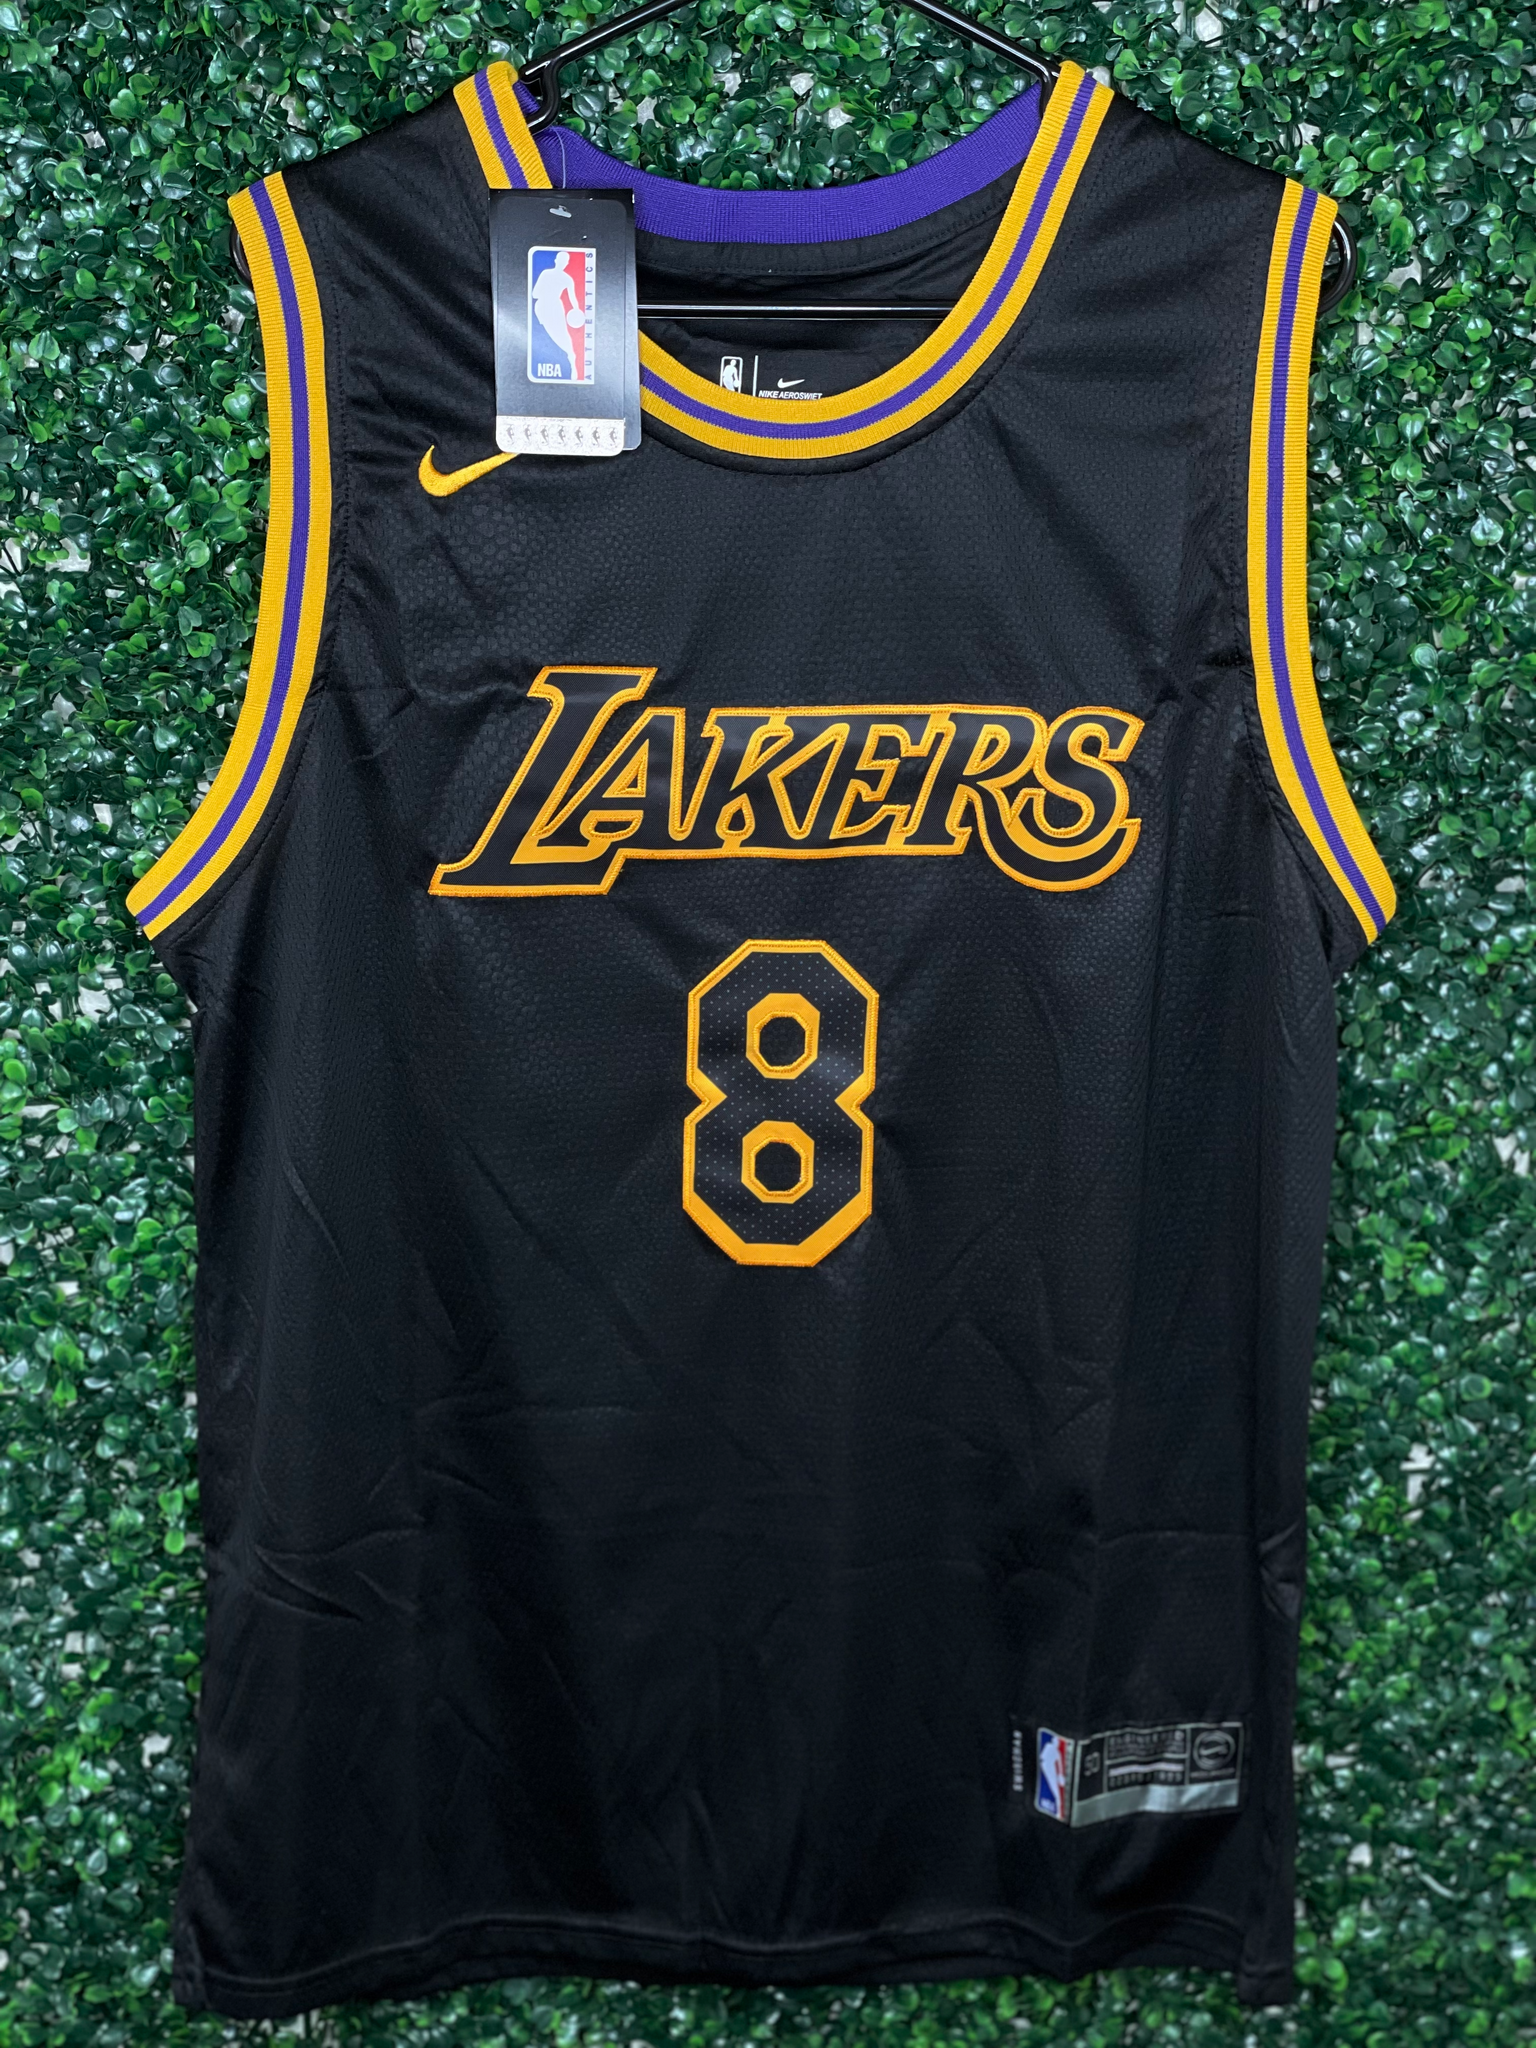 Kobe Bryant Los Angeles Lakers Jersey Black snake skin